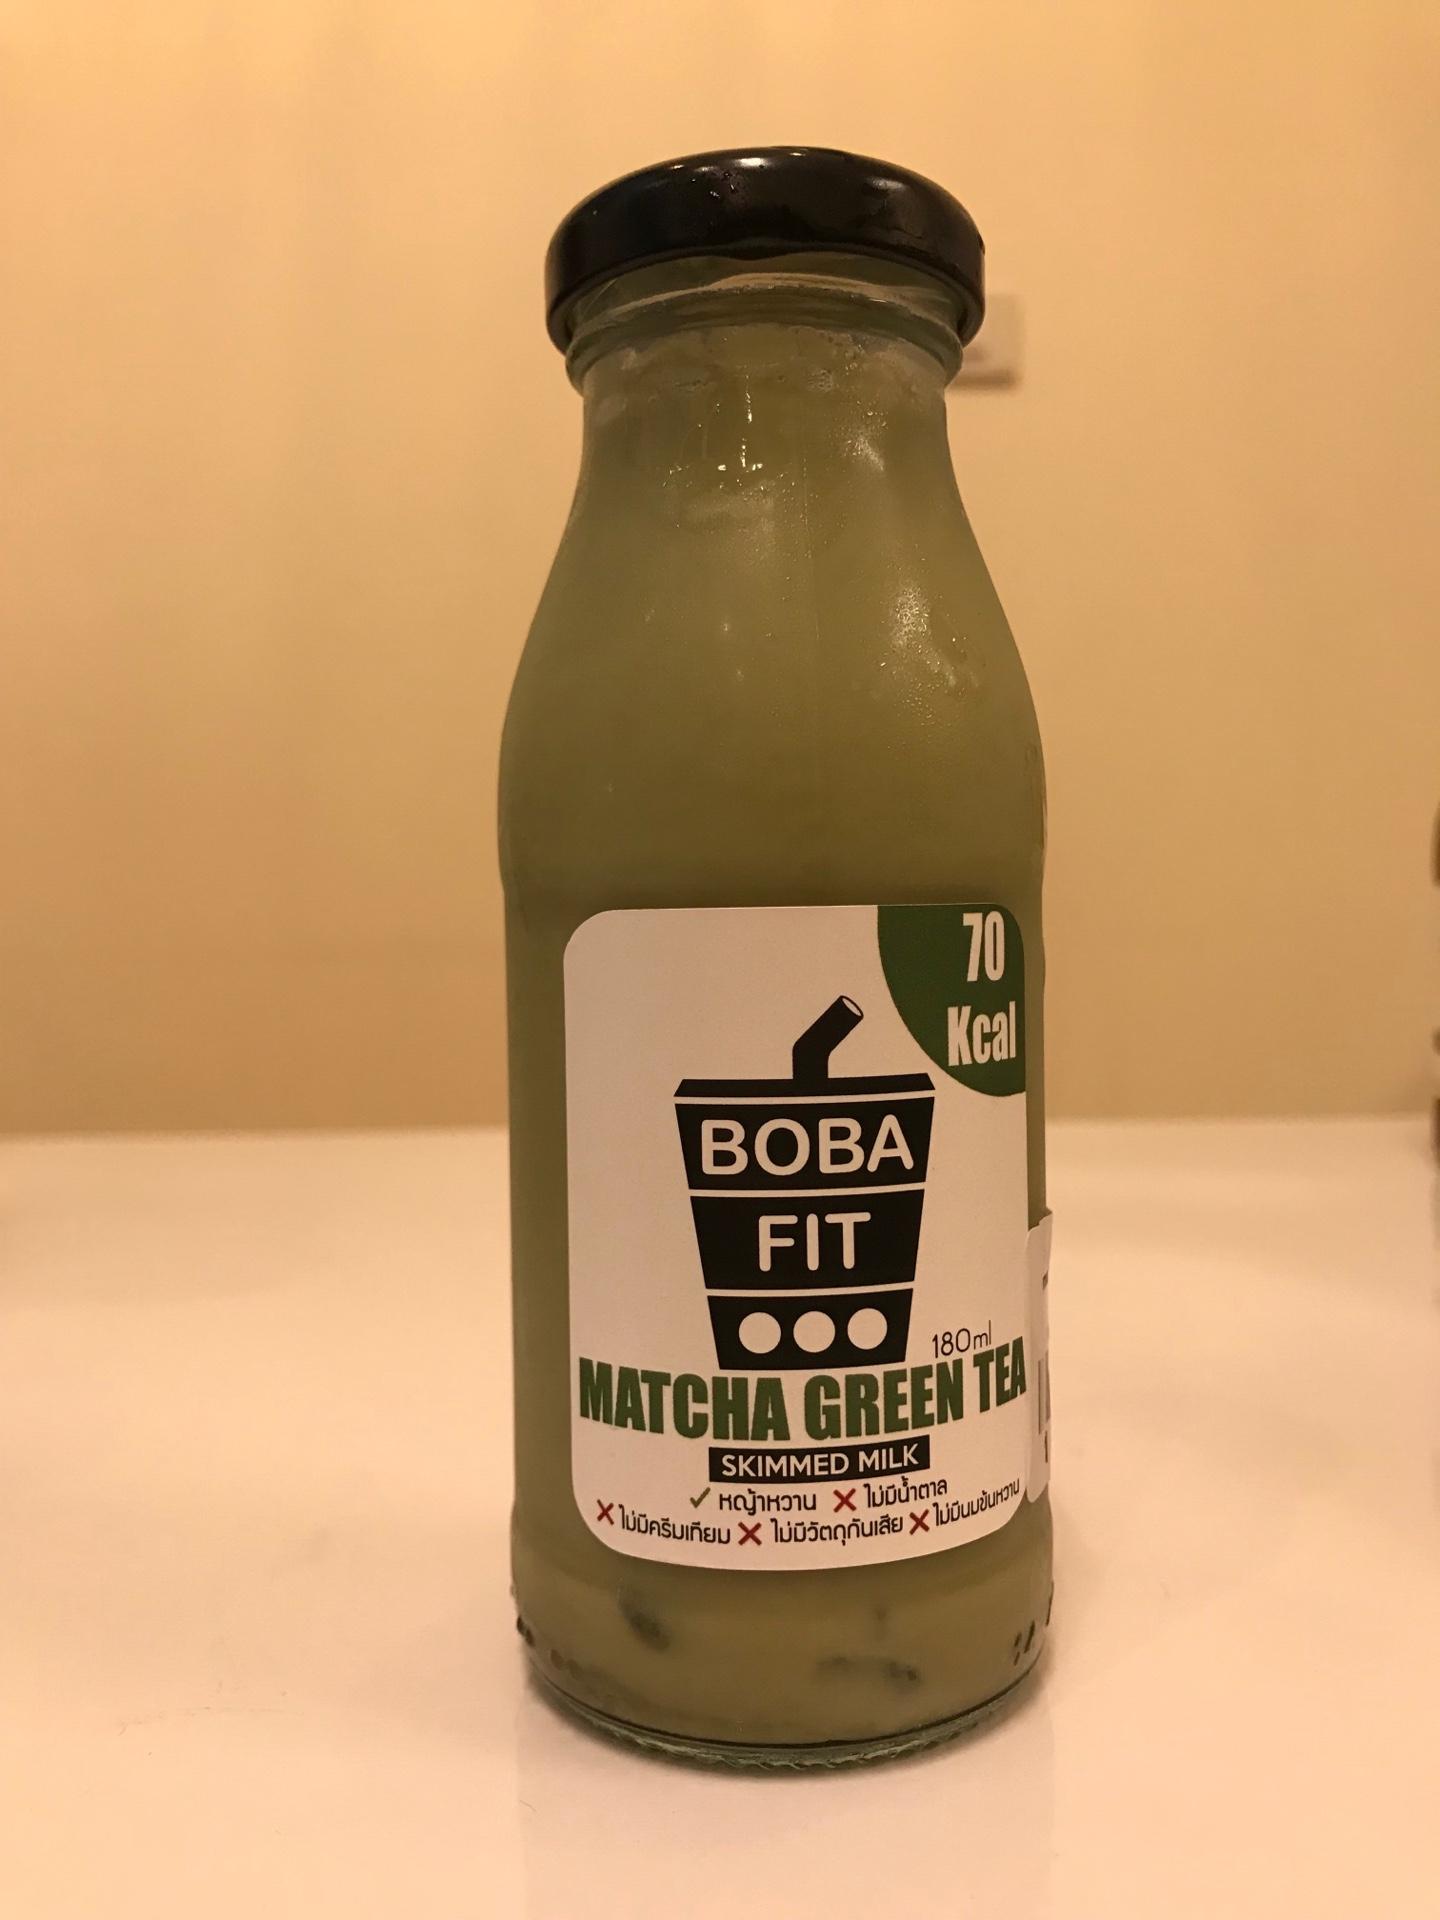 BOBA FIT matcha green tea ชานมไข่มุก ไม่อ้วน ไม่มีน้ำตาล ไม่มีครีมเทียม ไม่มีนมข้นหวาน ไม่มีสารกันบูด ชาเขียว 70kcal